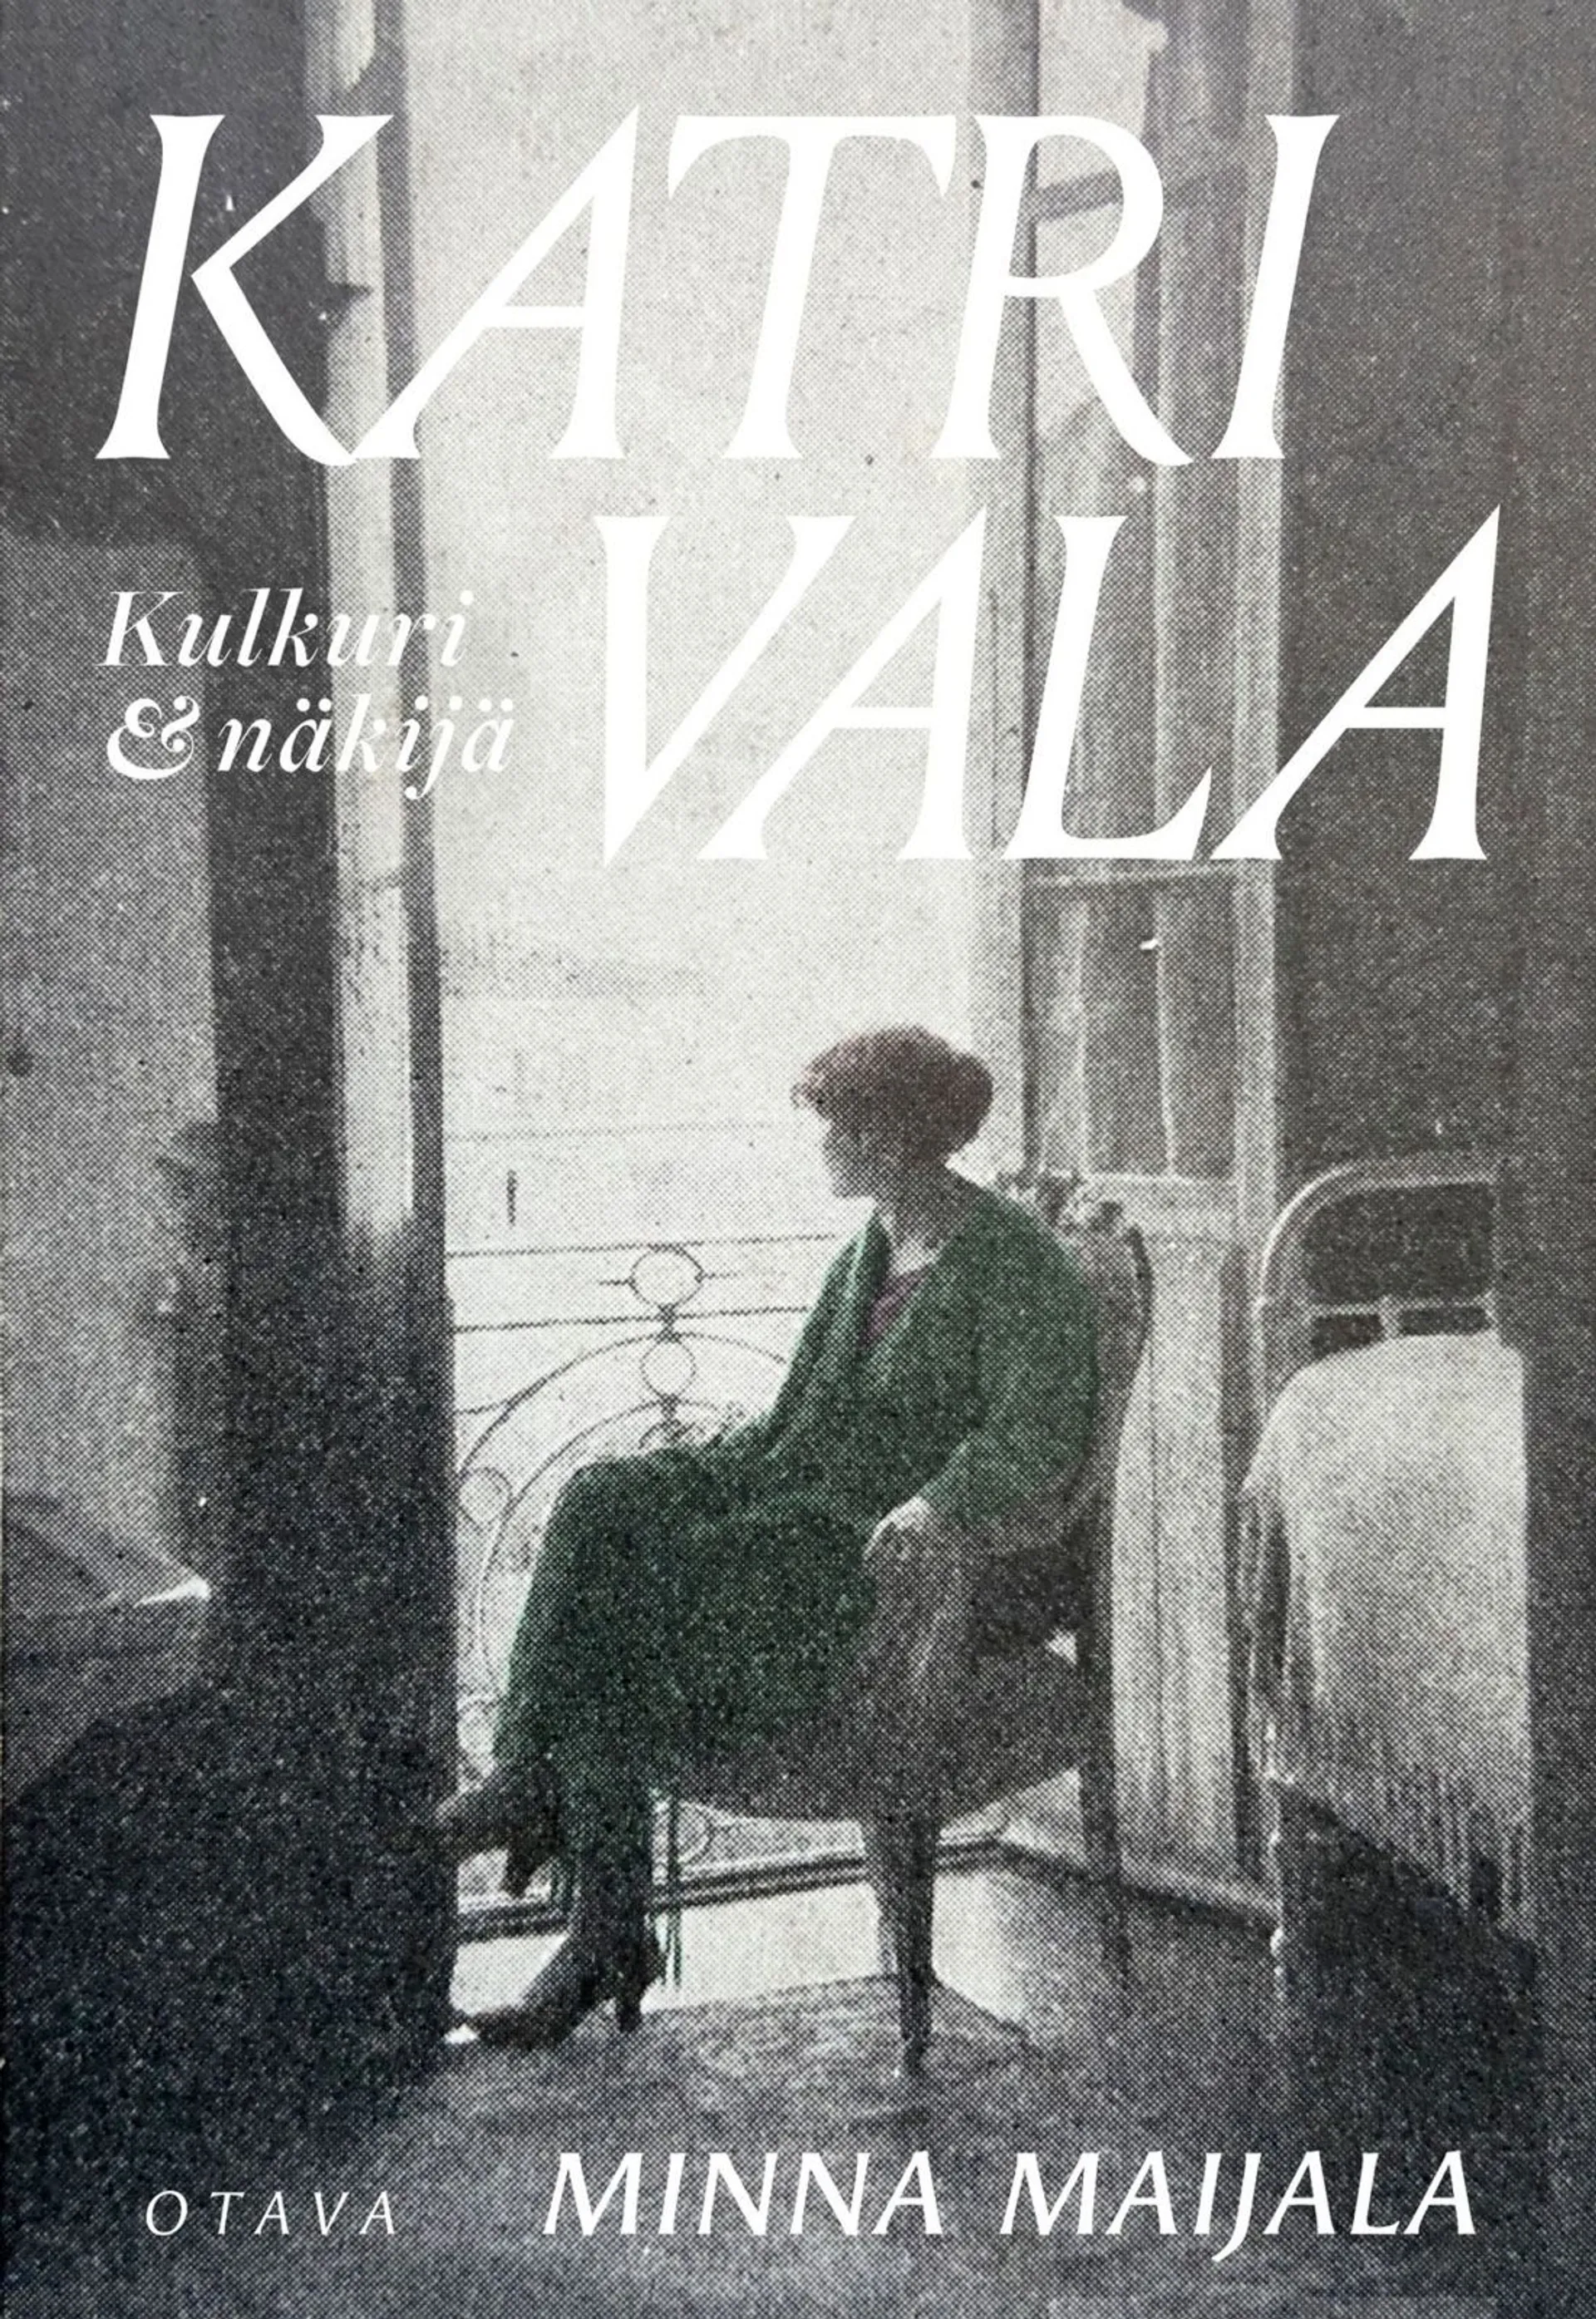 Maijala, Katri Vala